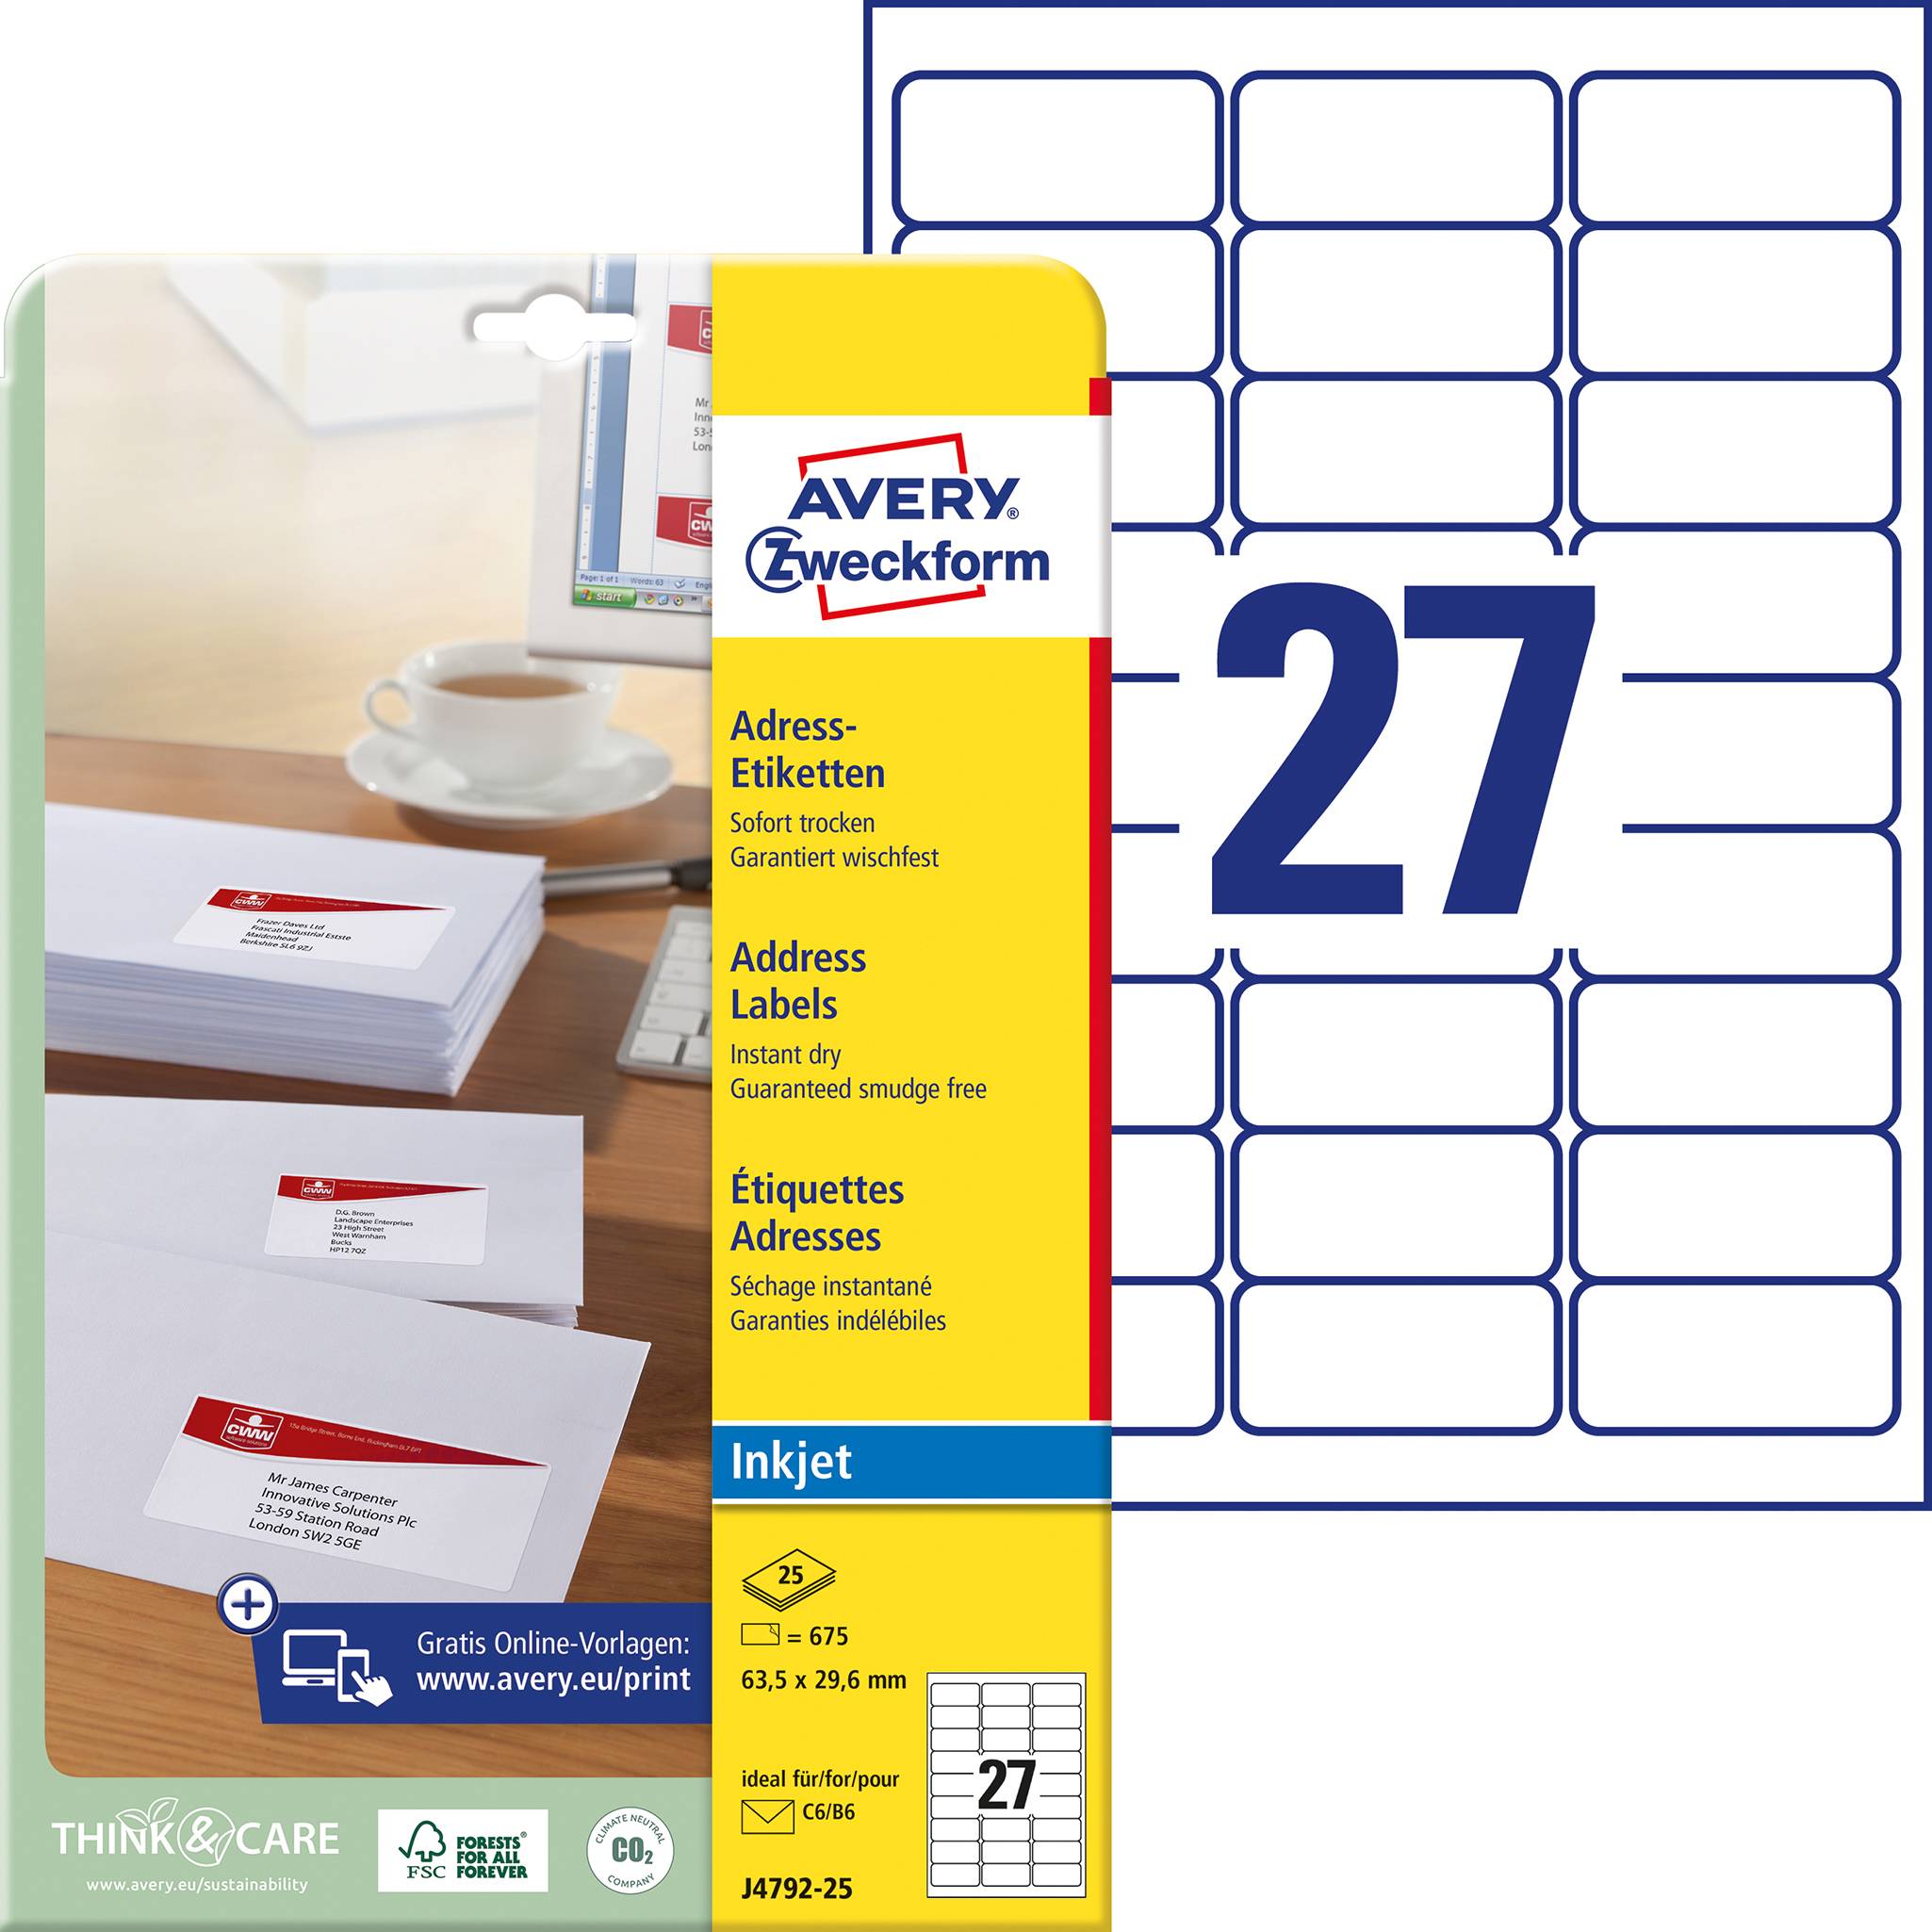 ZWECKFORM Avery J4792 - Adressetiketten - weiß - 29.6 x 63.5 mm - 675 Etikett(en) (25 Bogen x 27) (J